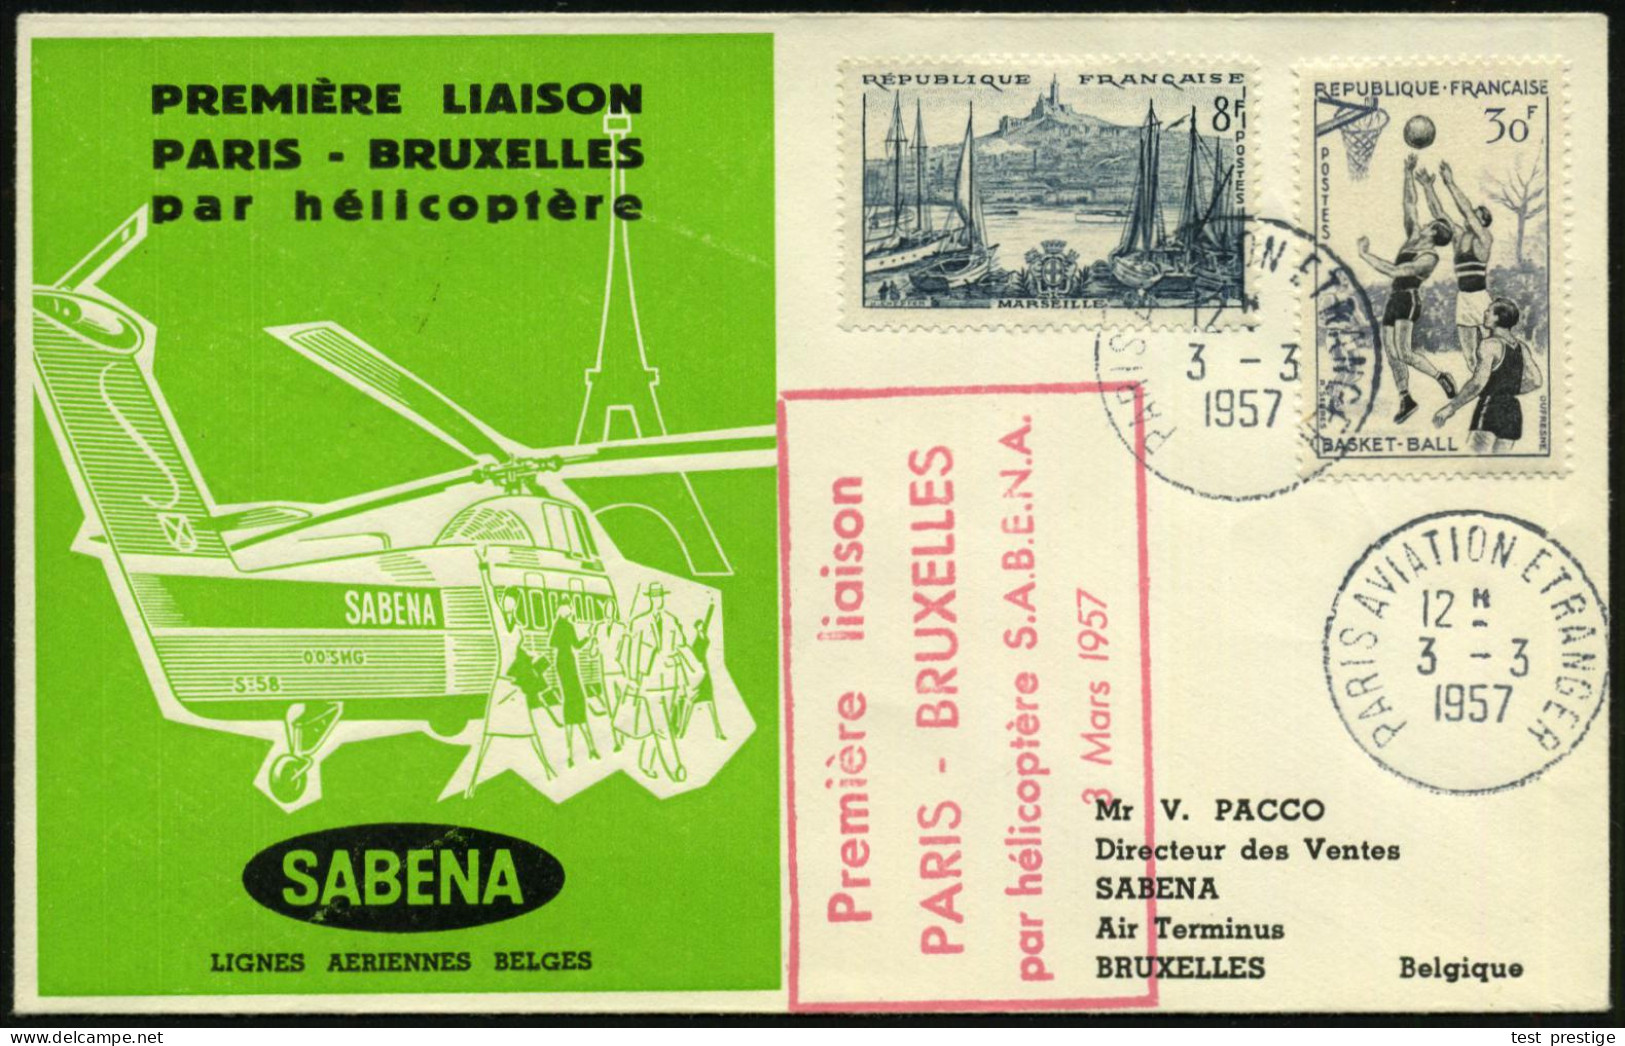 FRANKREICH 1957 (3.3.) Helikopter-SU: PREMIERE LIAISON/ PARIS - BRUXELLES (SABENA) Rs. Helikopter-AS, 1K: PARIS AVIATION - Hubschrauber